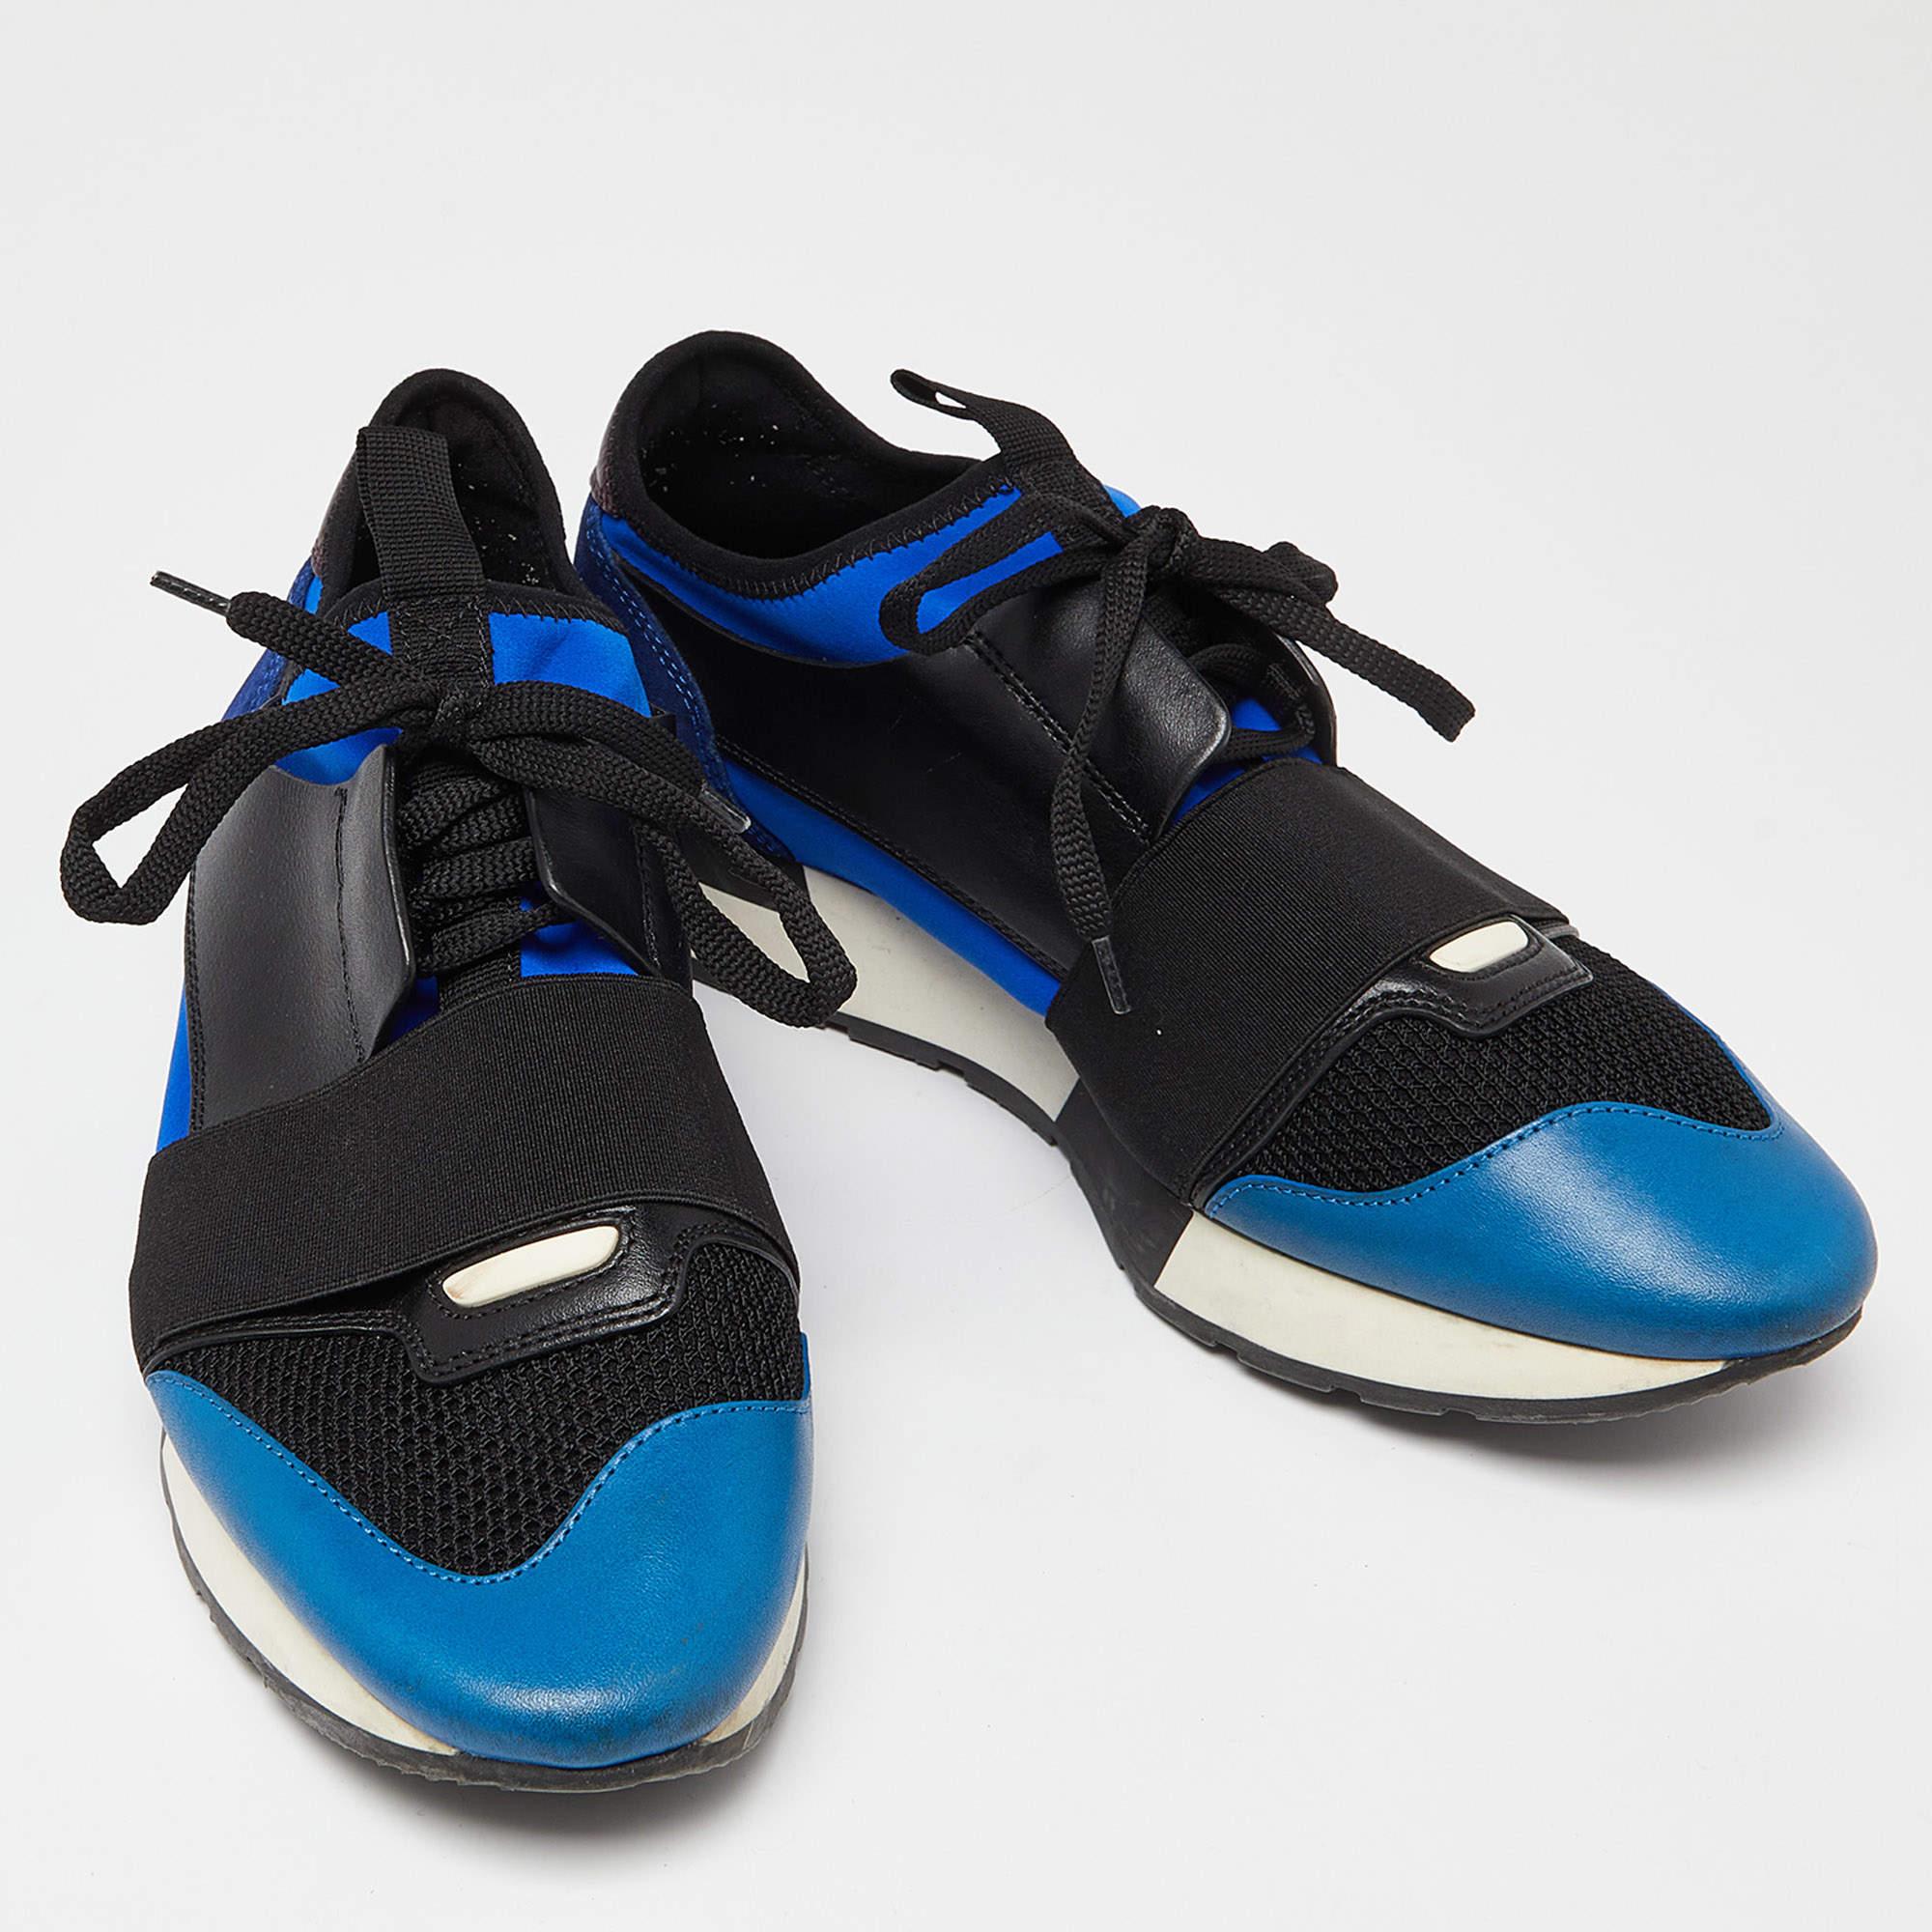 Balenciaga Tri Color Leather, Neoprene and Mesh Race Runner Sneakers Size 40 In Fair Condition For Sale In Dubai, Al Qouz 2